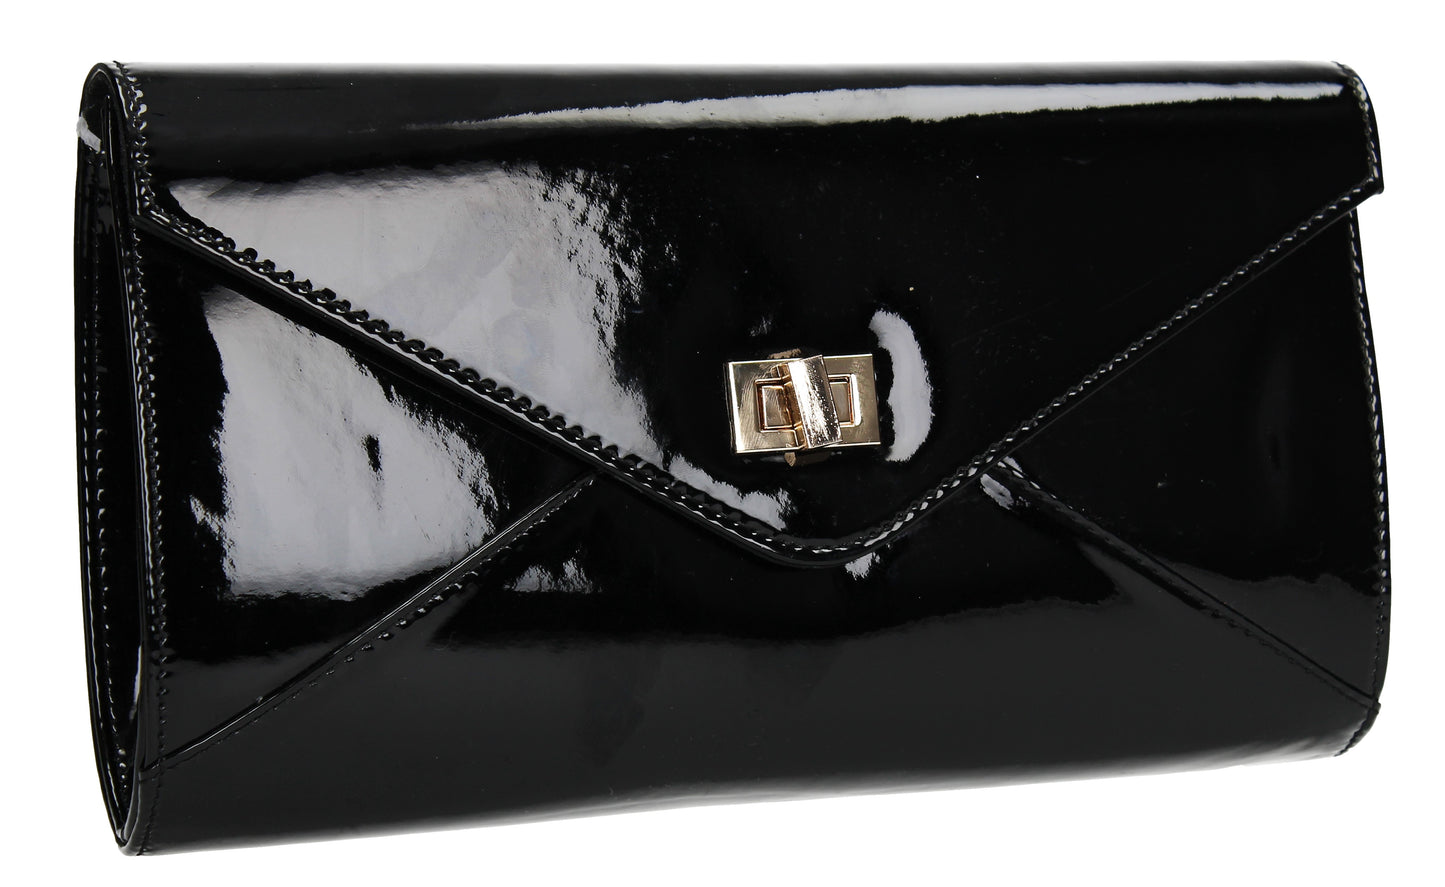 SWANKYSWANS Briana Patent Clutch Bag Black Cute Cheap Clutch Bag For Weddings School and Work